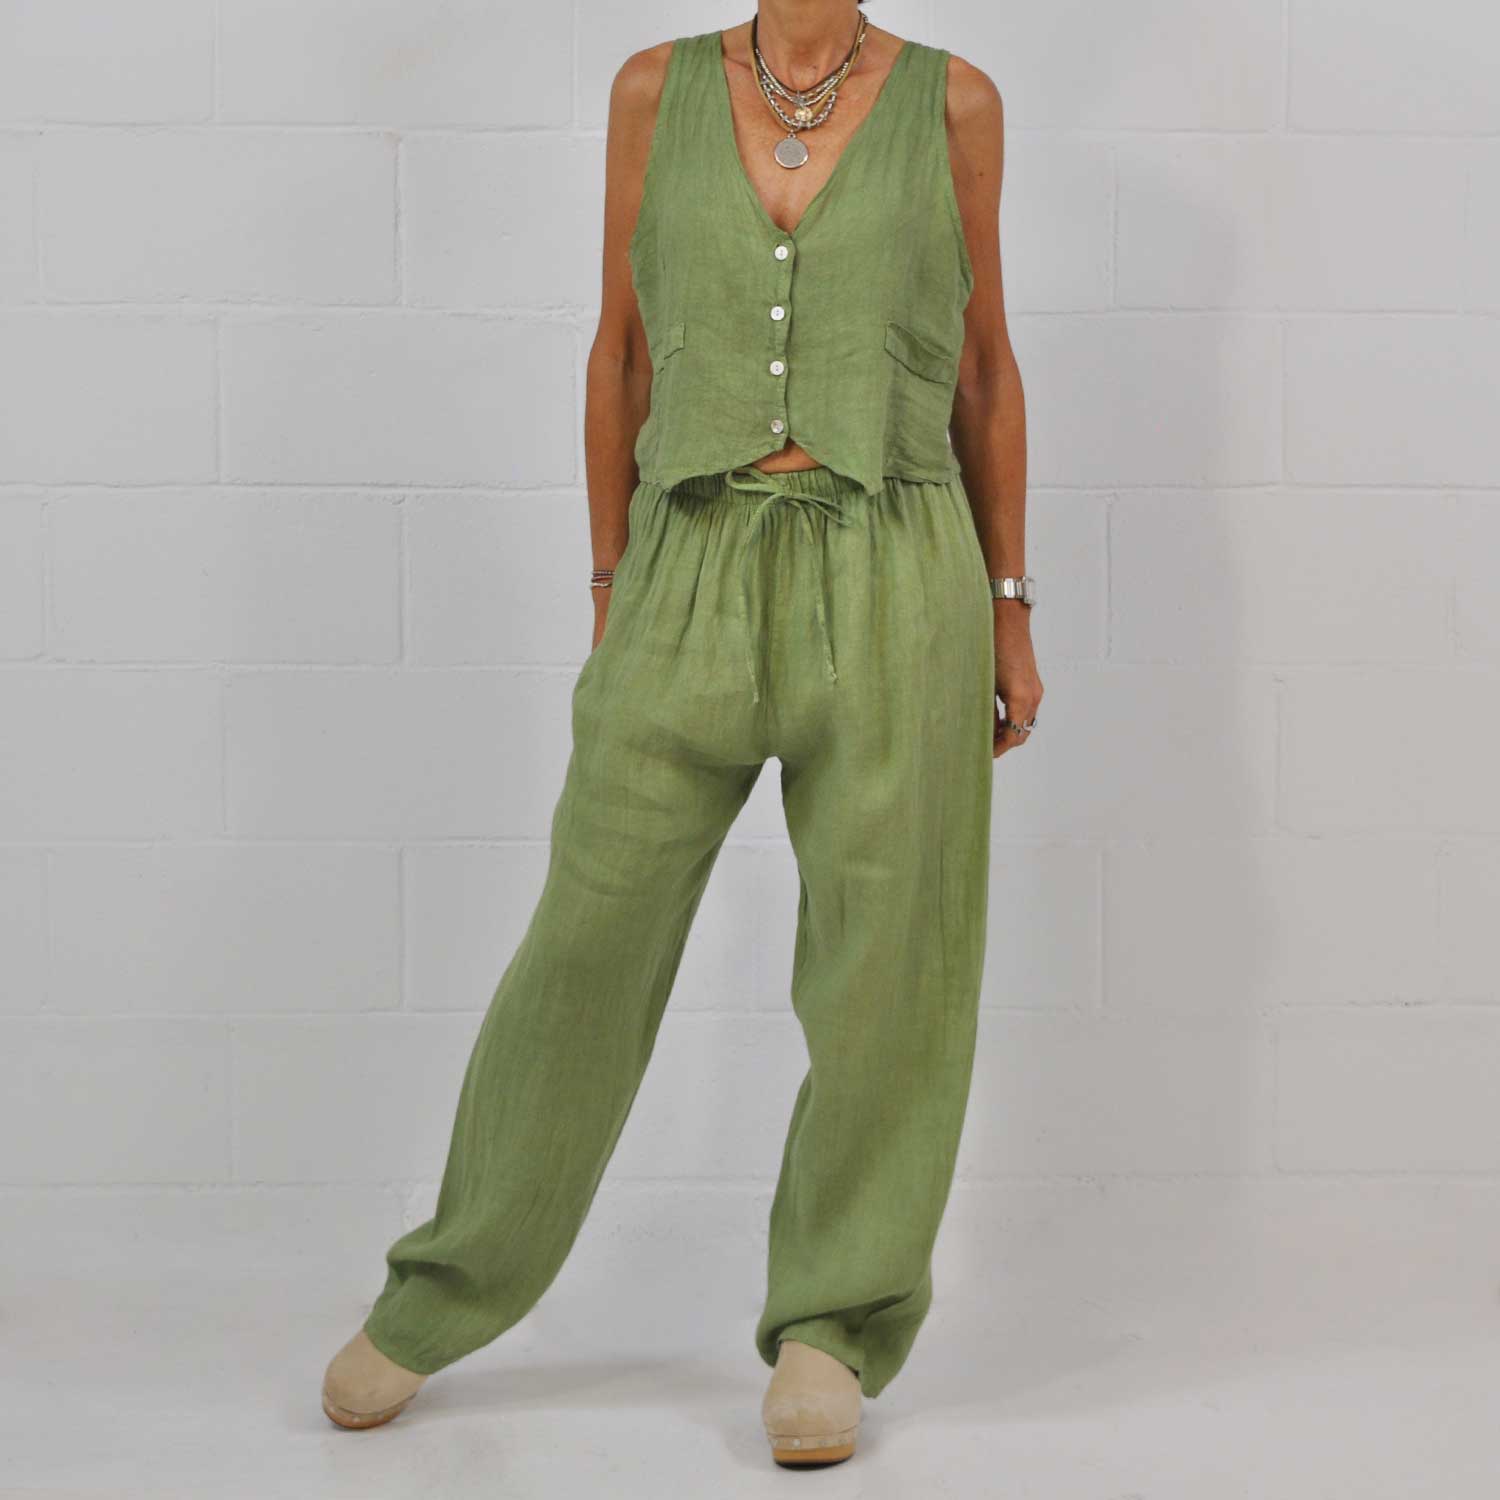 Pantalon large lin vert